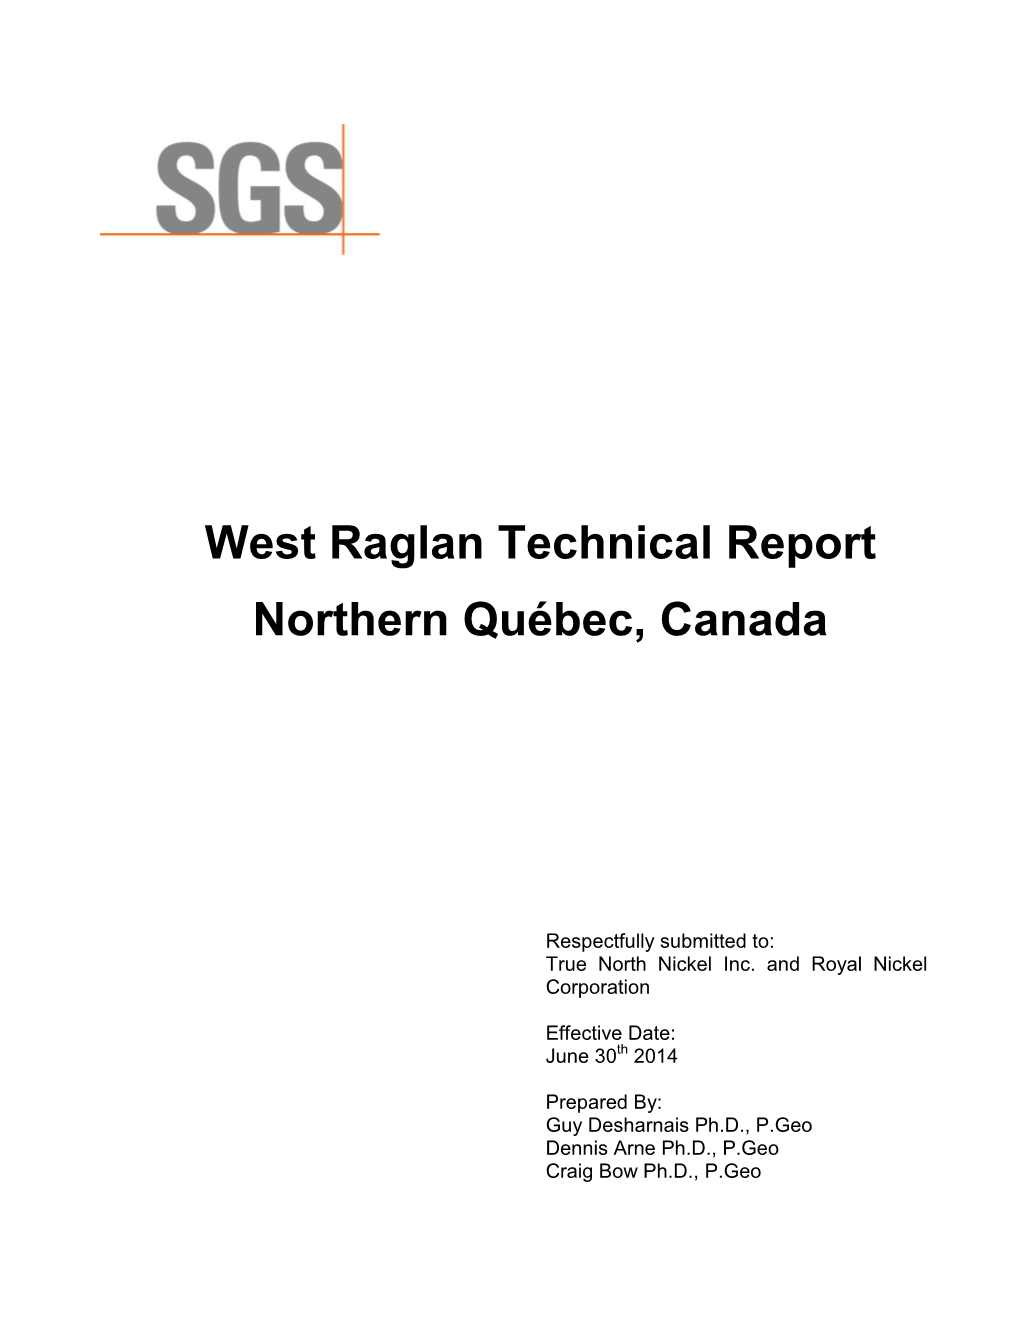 West Raglan Technical Report Northern Québec, Canada